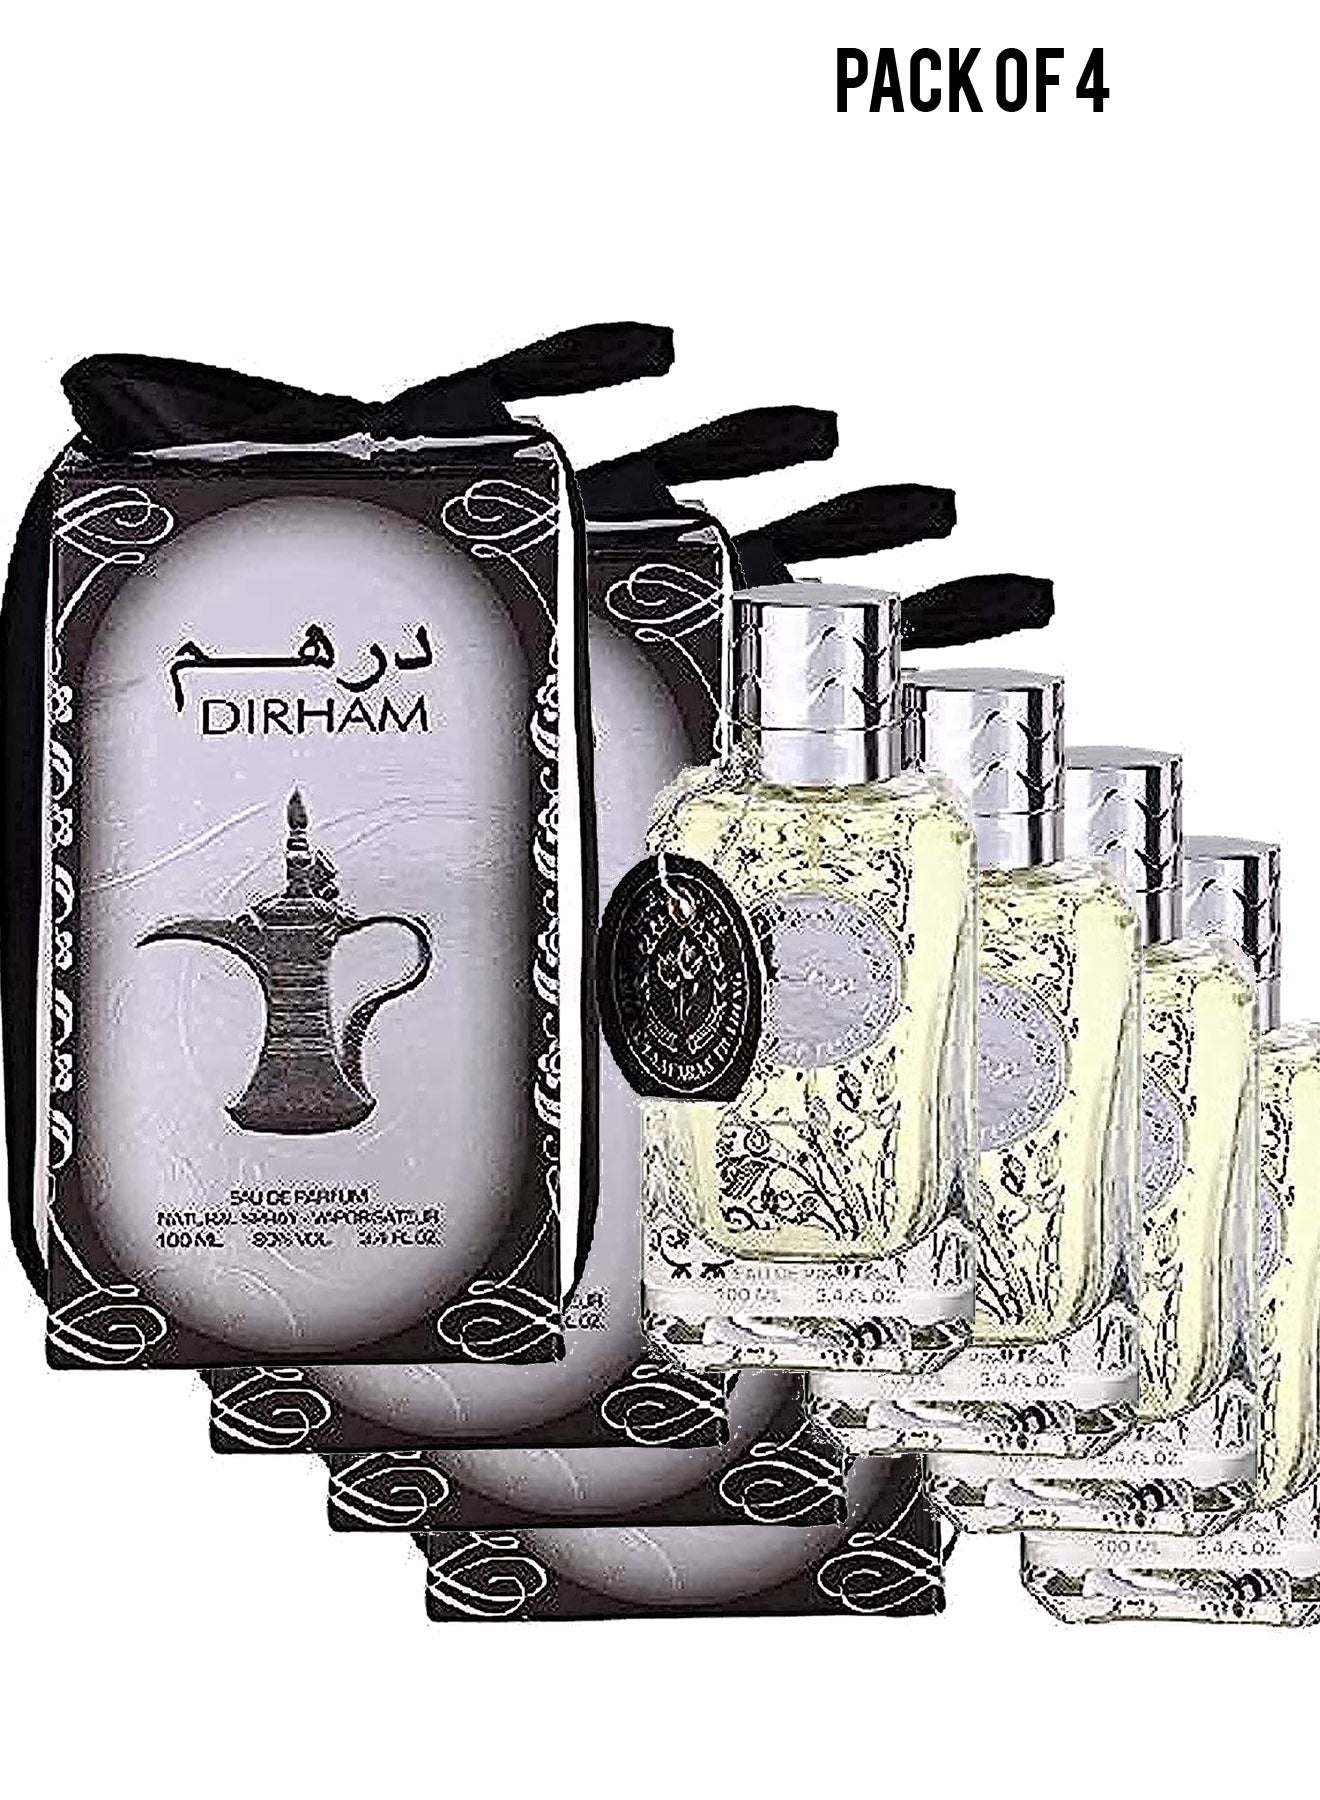 Dirham Eau De Parfum 100ml Value Pack of 4 